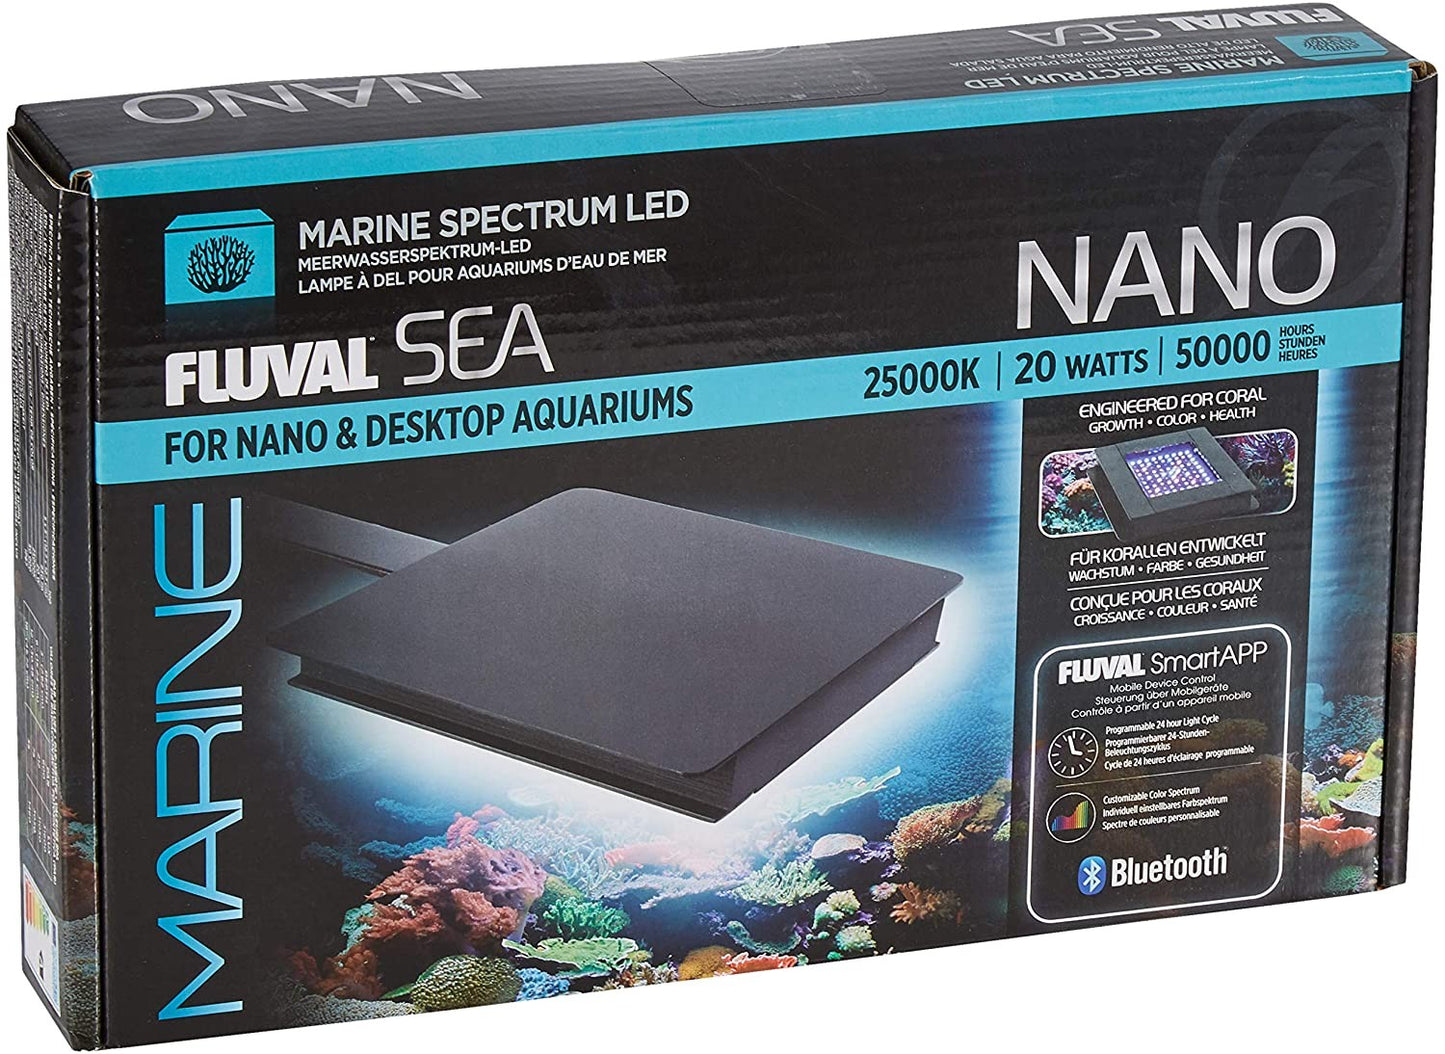 Fluval Nano Marine LED